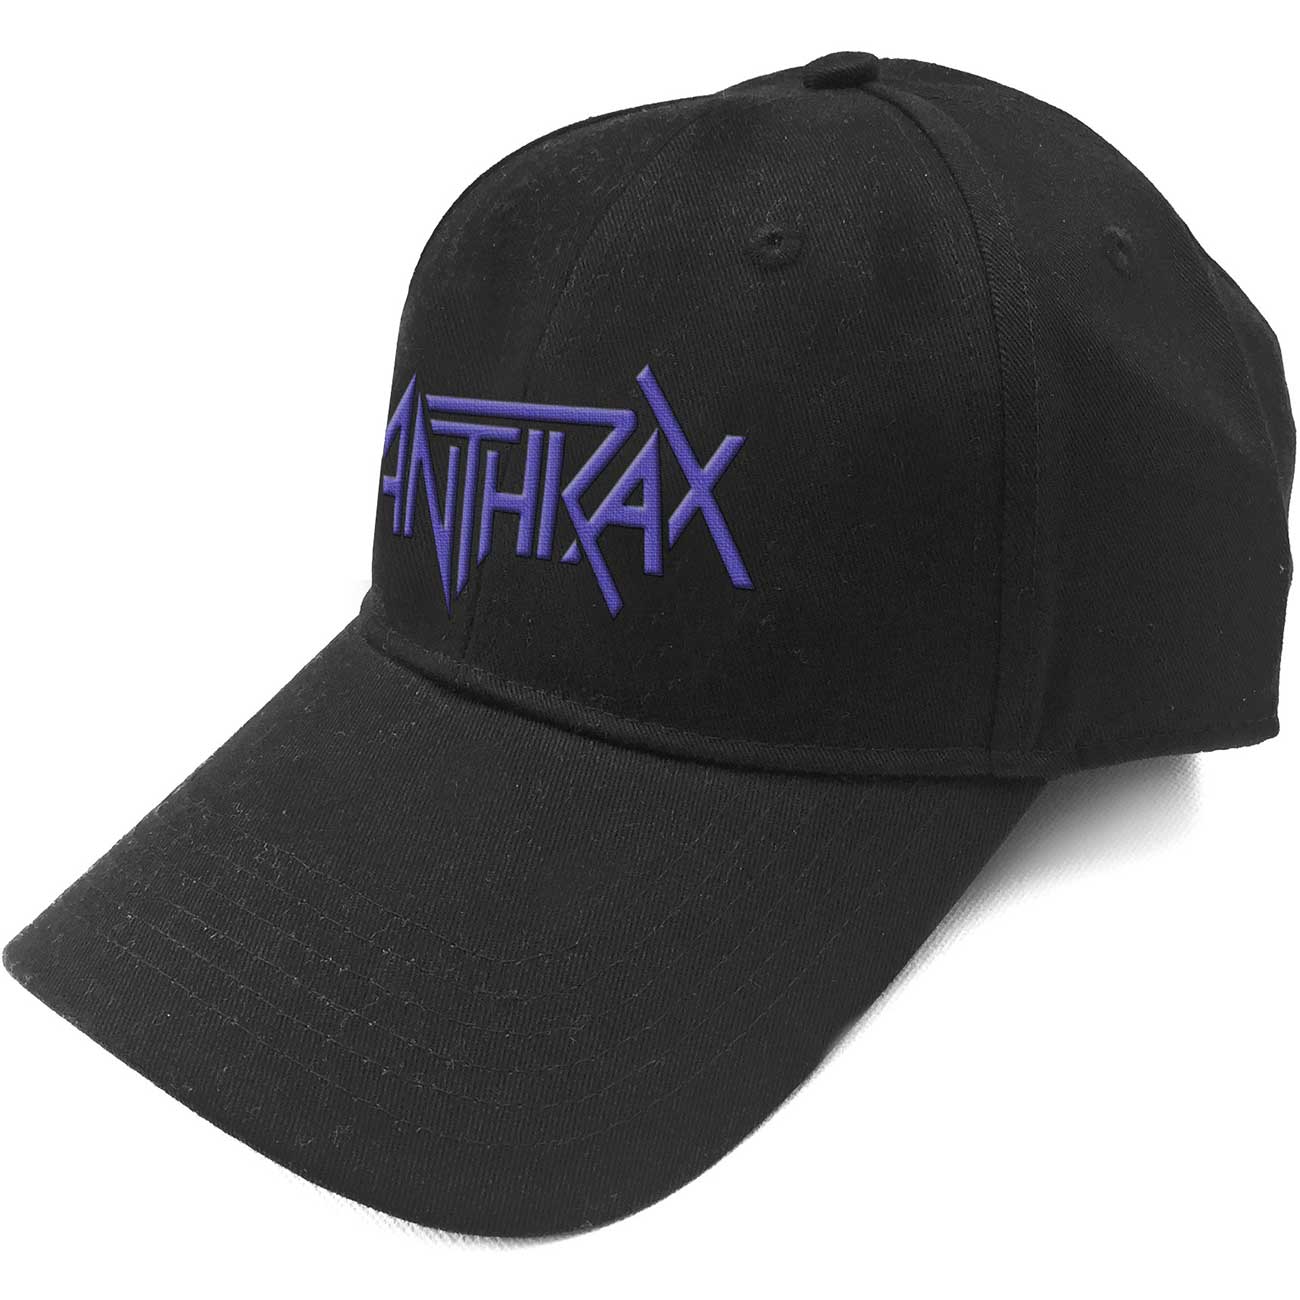 Anthrax Baseball Cap: Logo